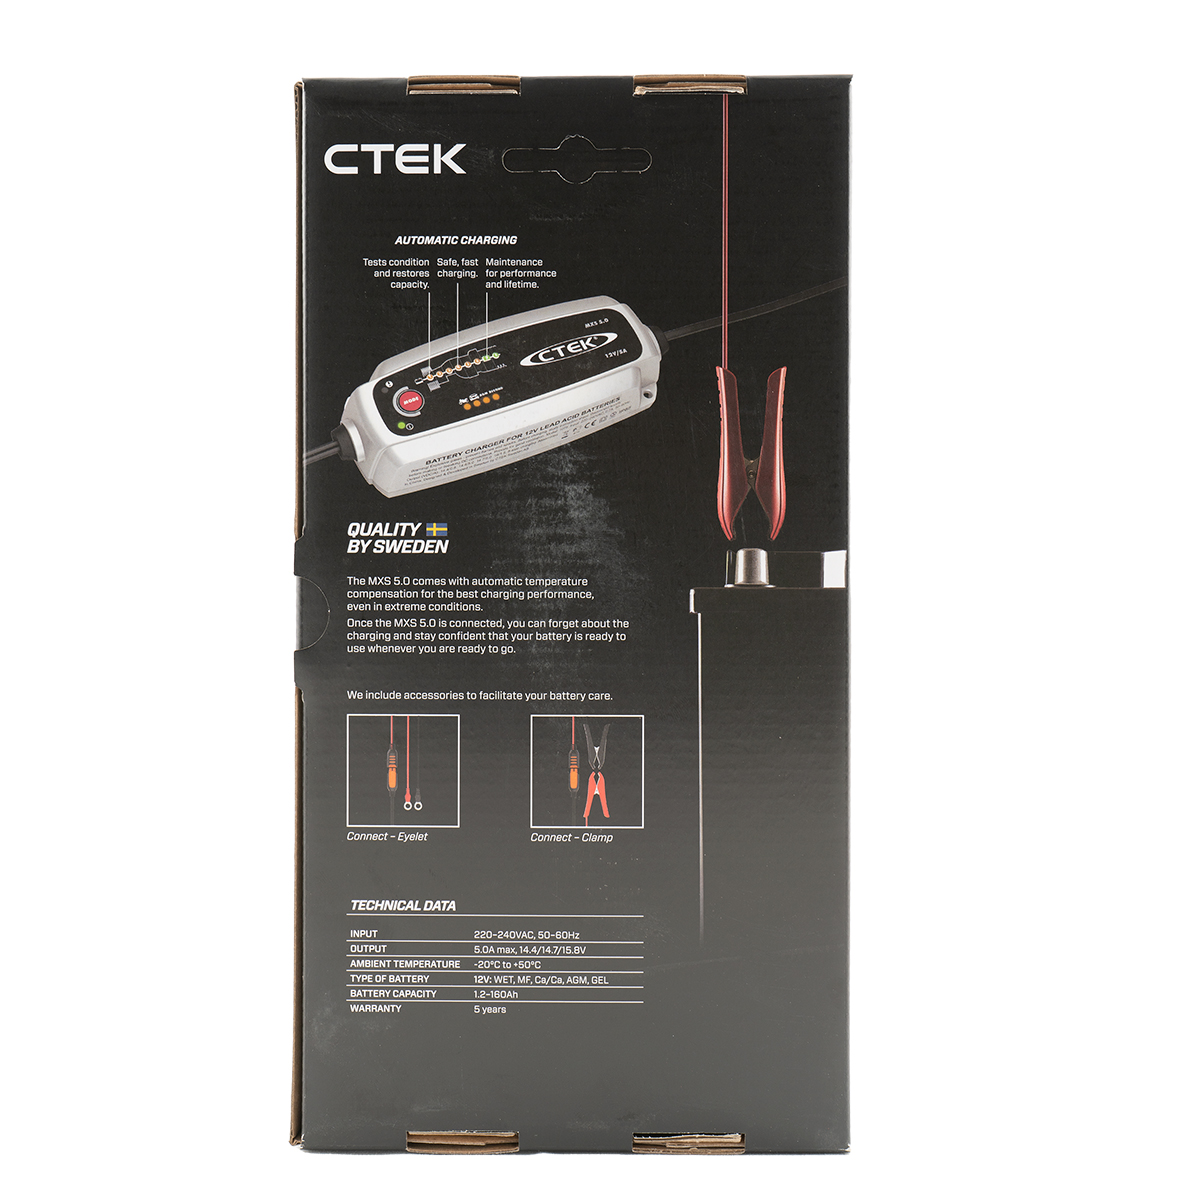 CTEK MXS 5.0 Ladegerät 12 Volt Batterieladegerät